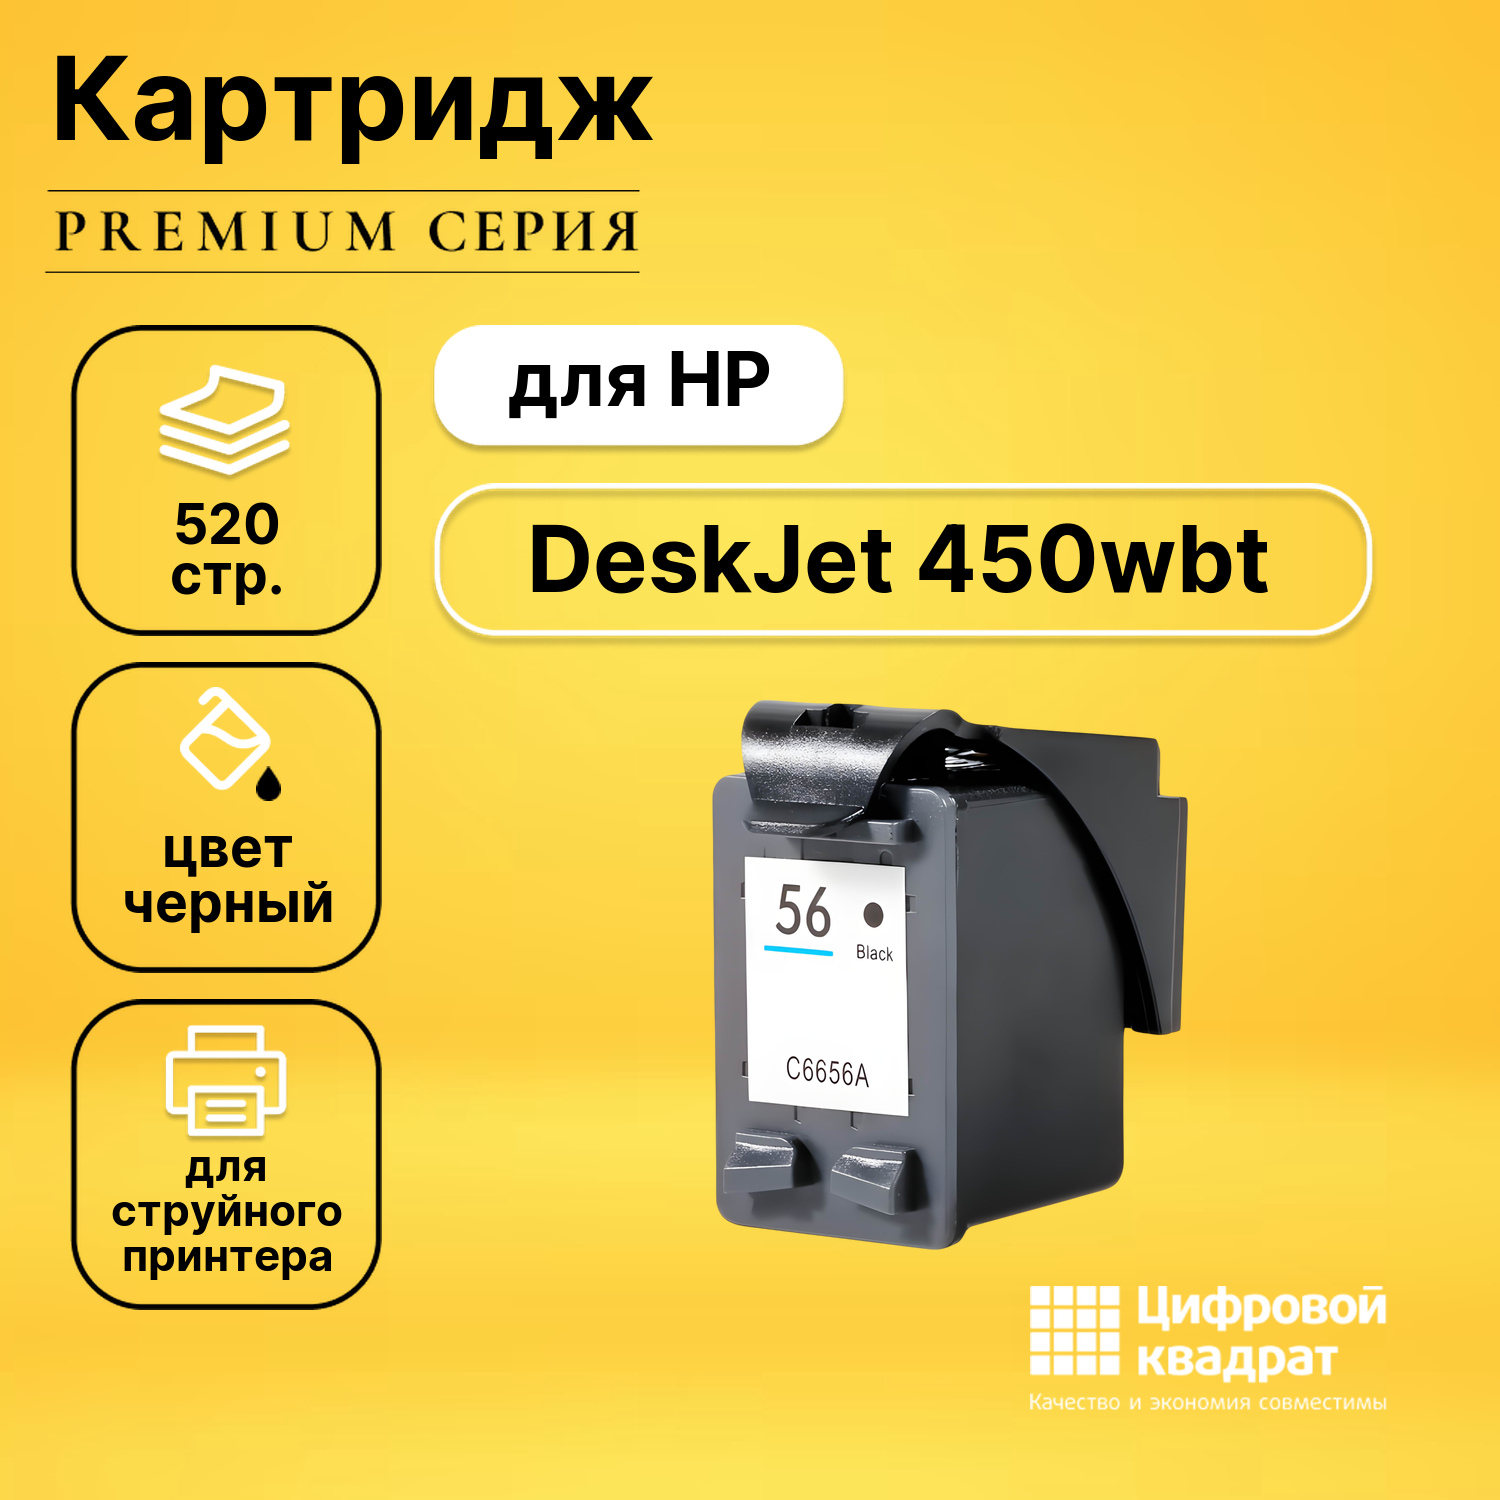 Картридж DS для HP DeskJet 450wbt совместимый